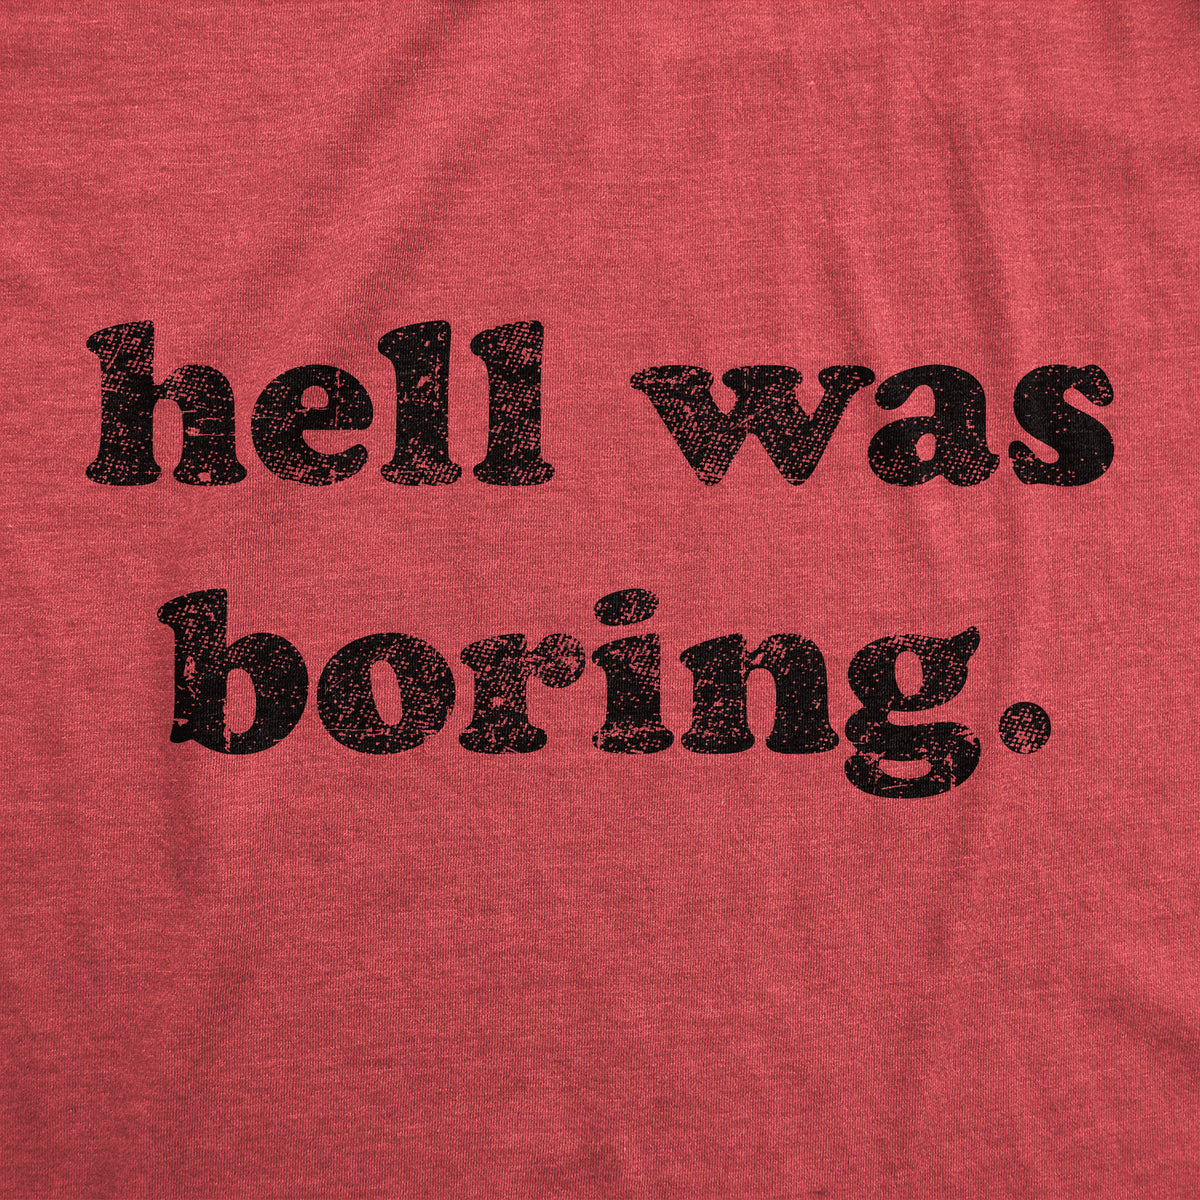 Hell Was Boring Men&#39;s T Shirt